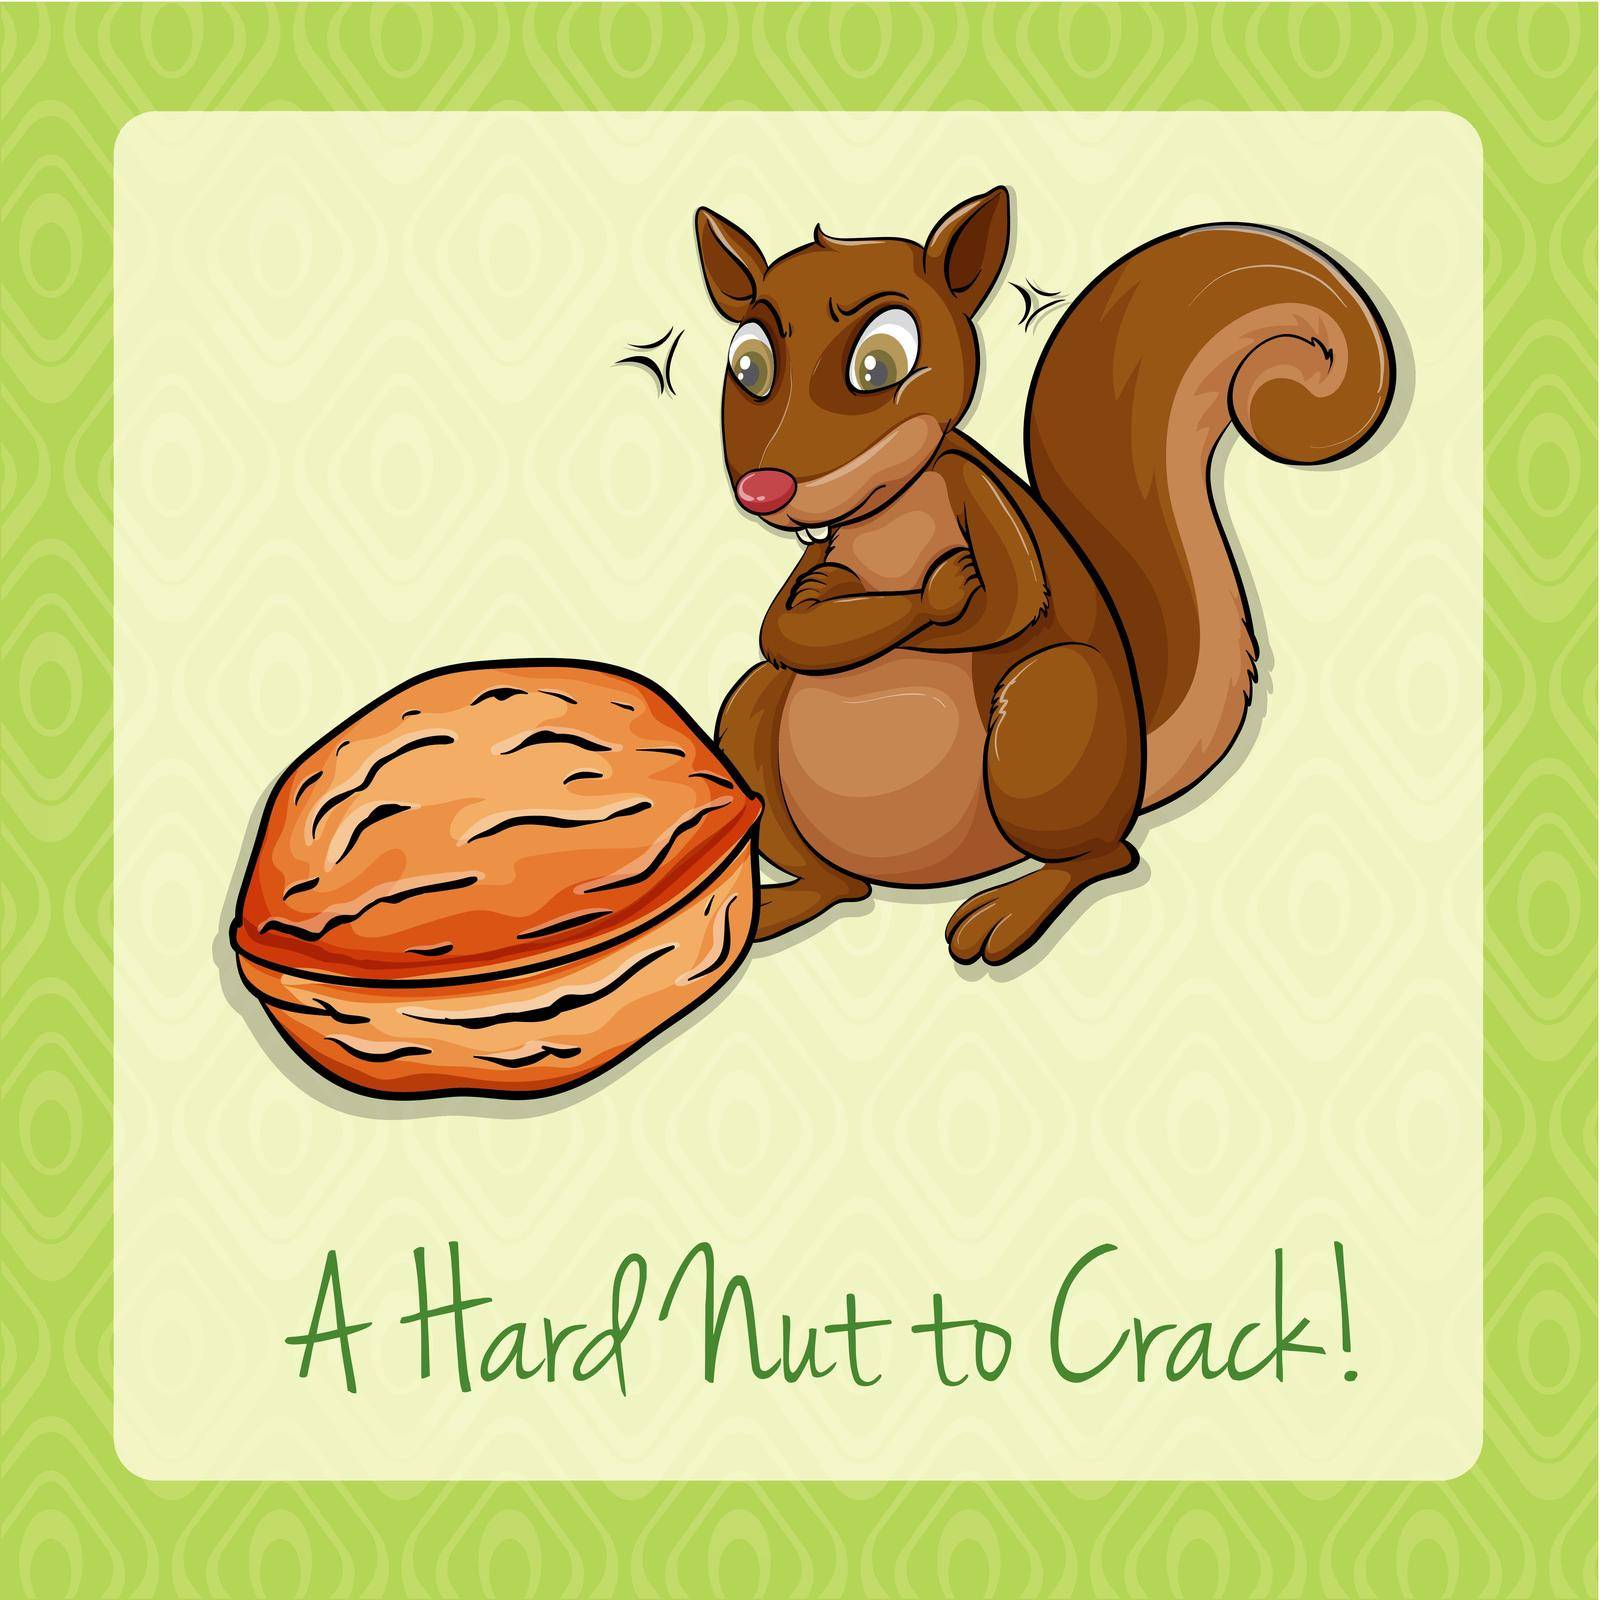 Hard nut to crack illustration